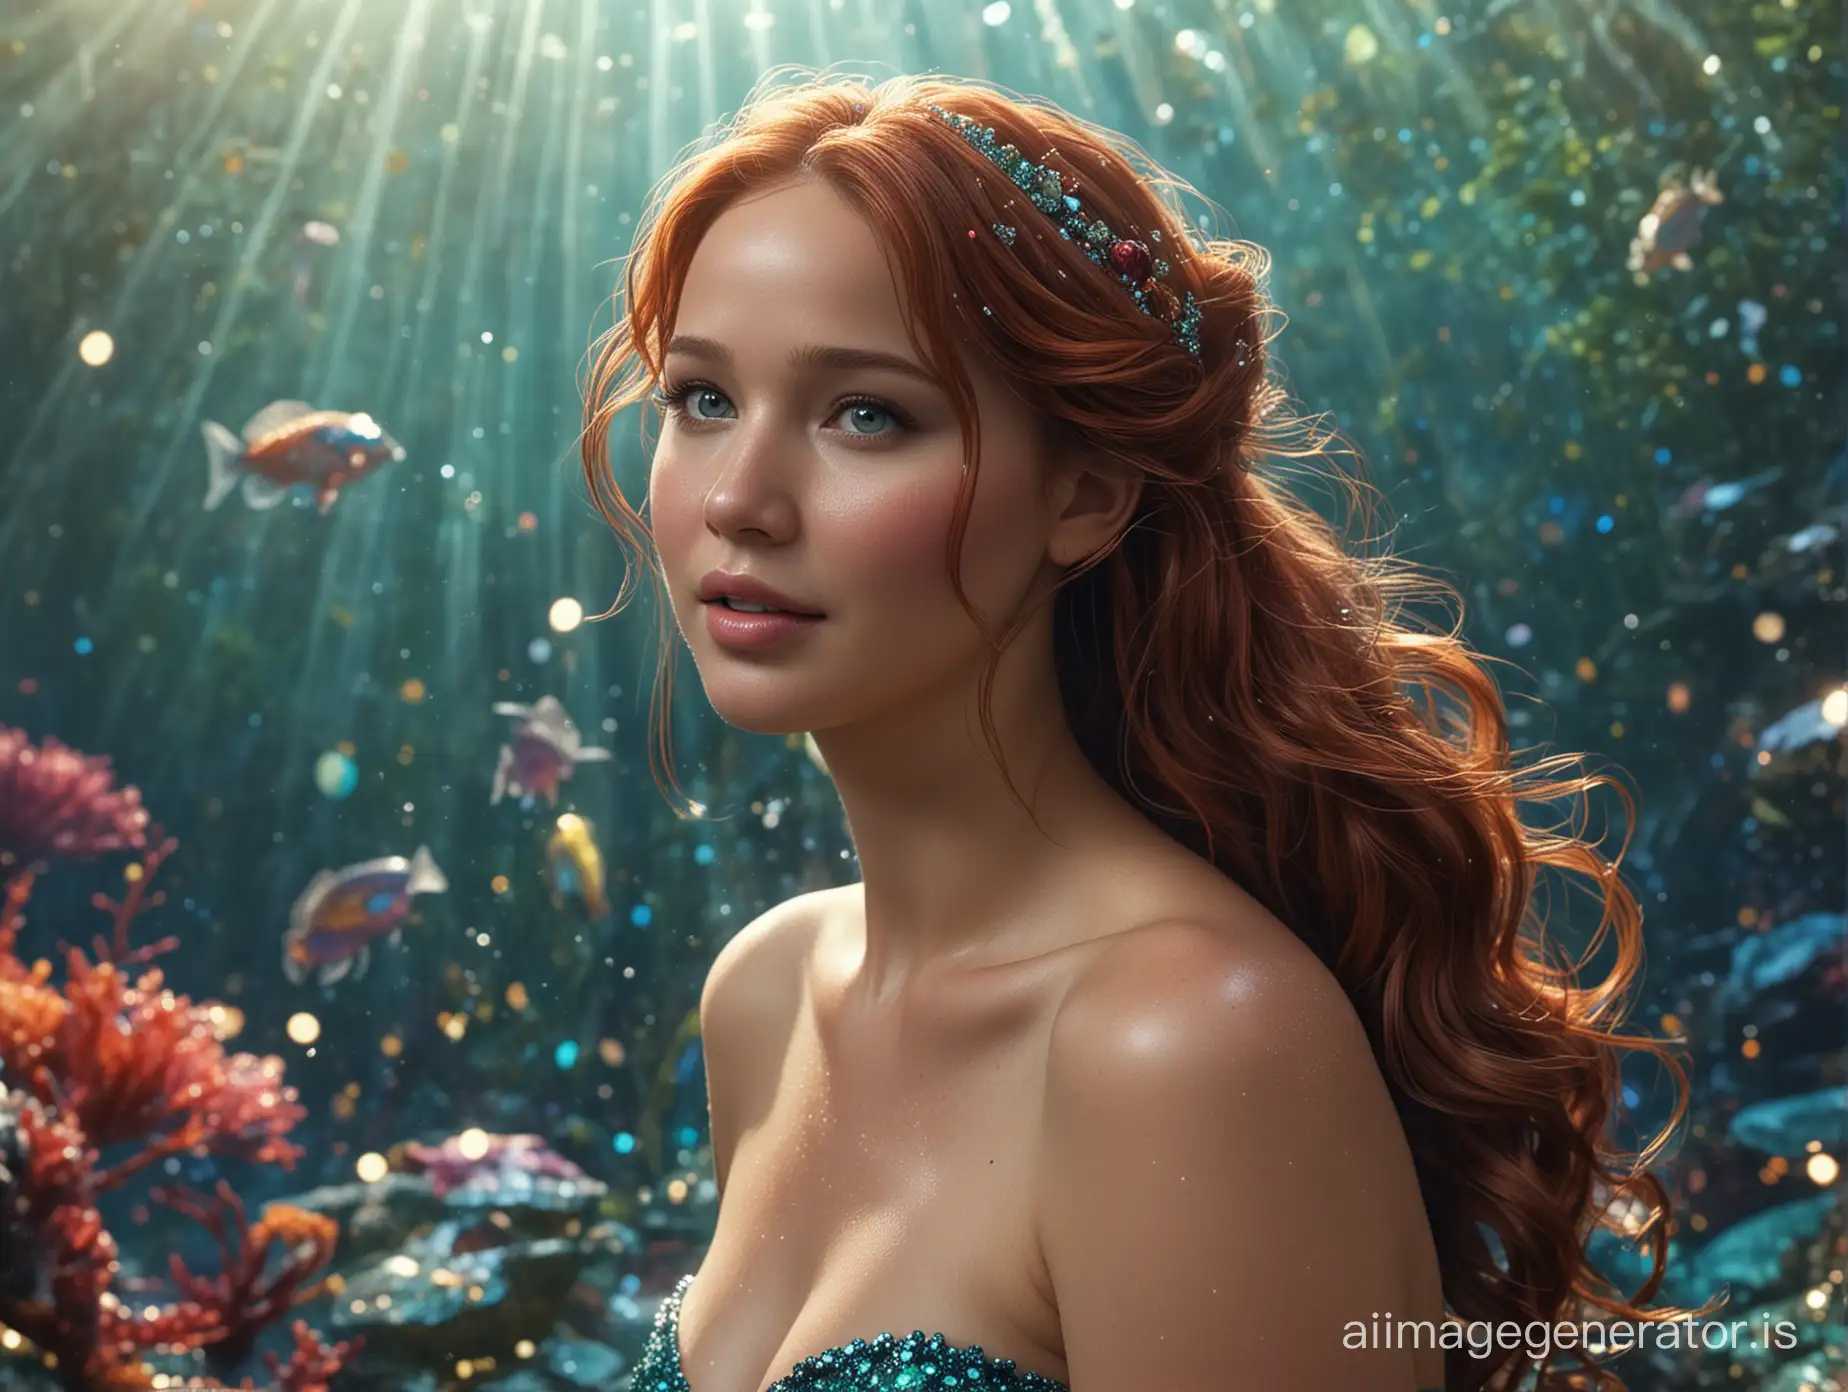 UltraPhotorealistic-Vogue-Portrait-of-Jennifer-Lawrence-as-the-Little-Mermaid